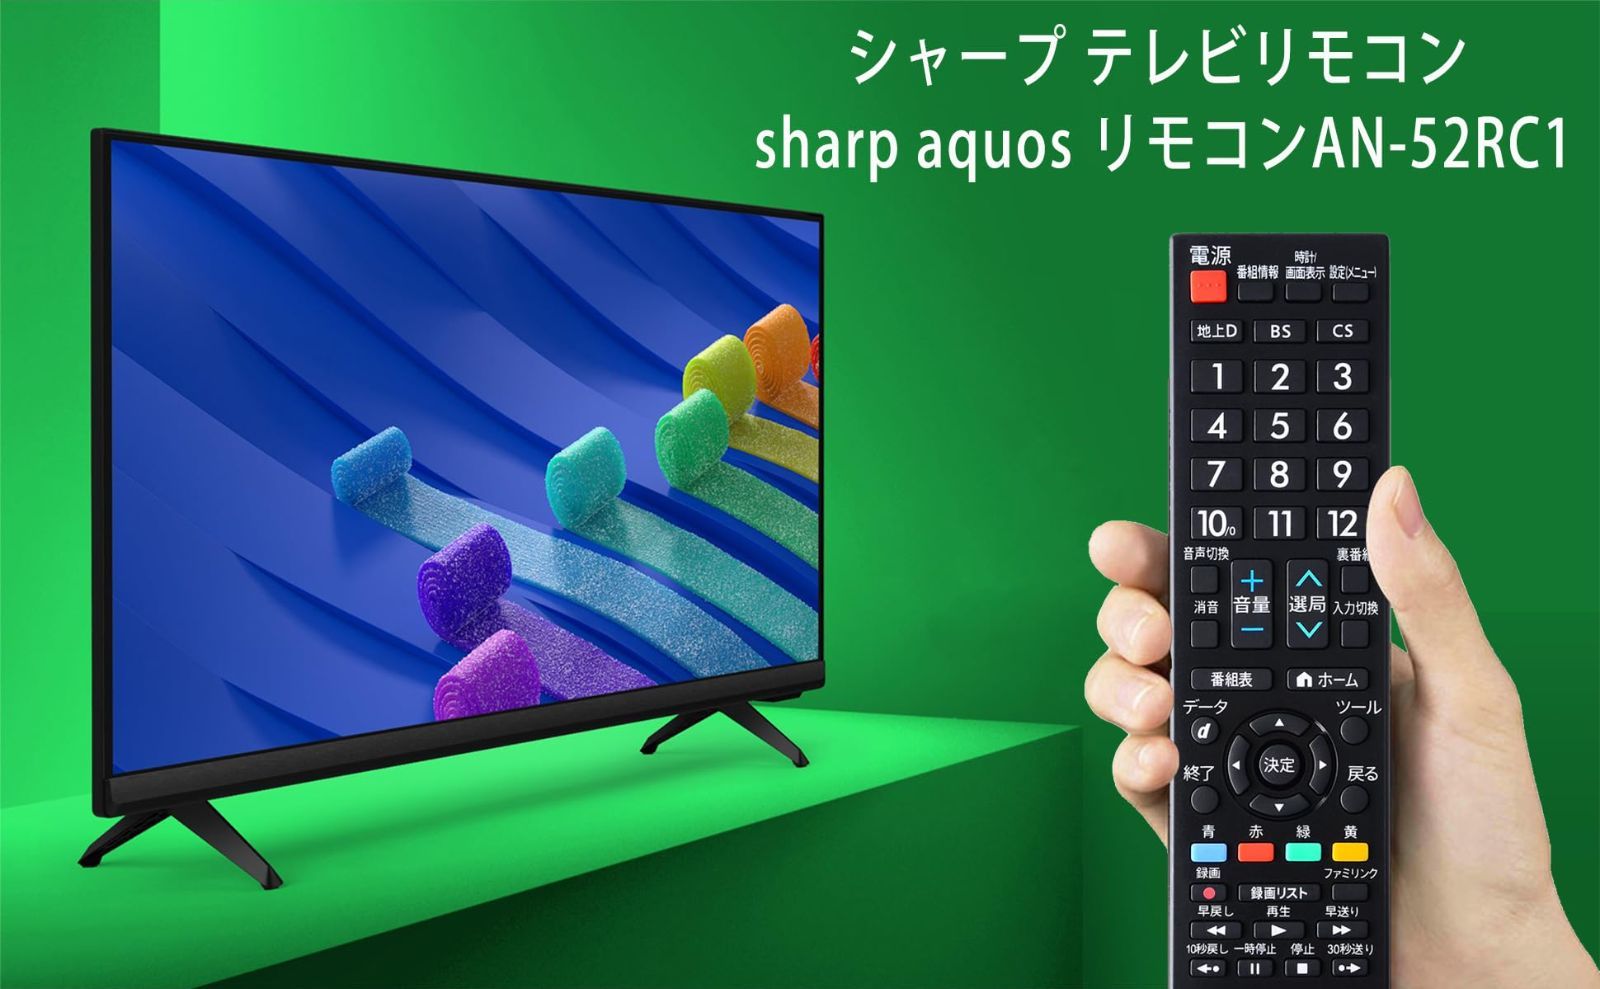 SHARP AQUOS 液晶テレビ LC-37GX5 - テレビ